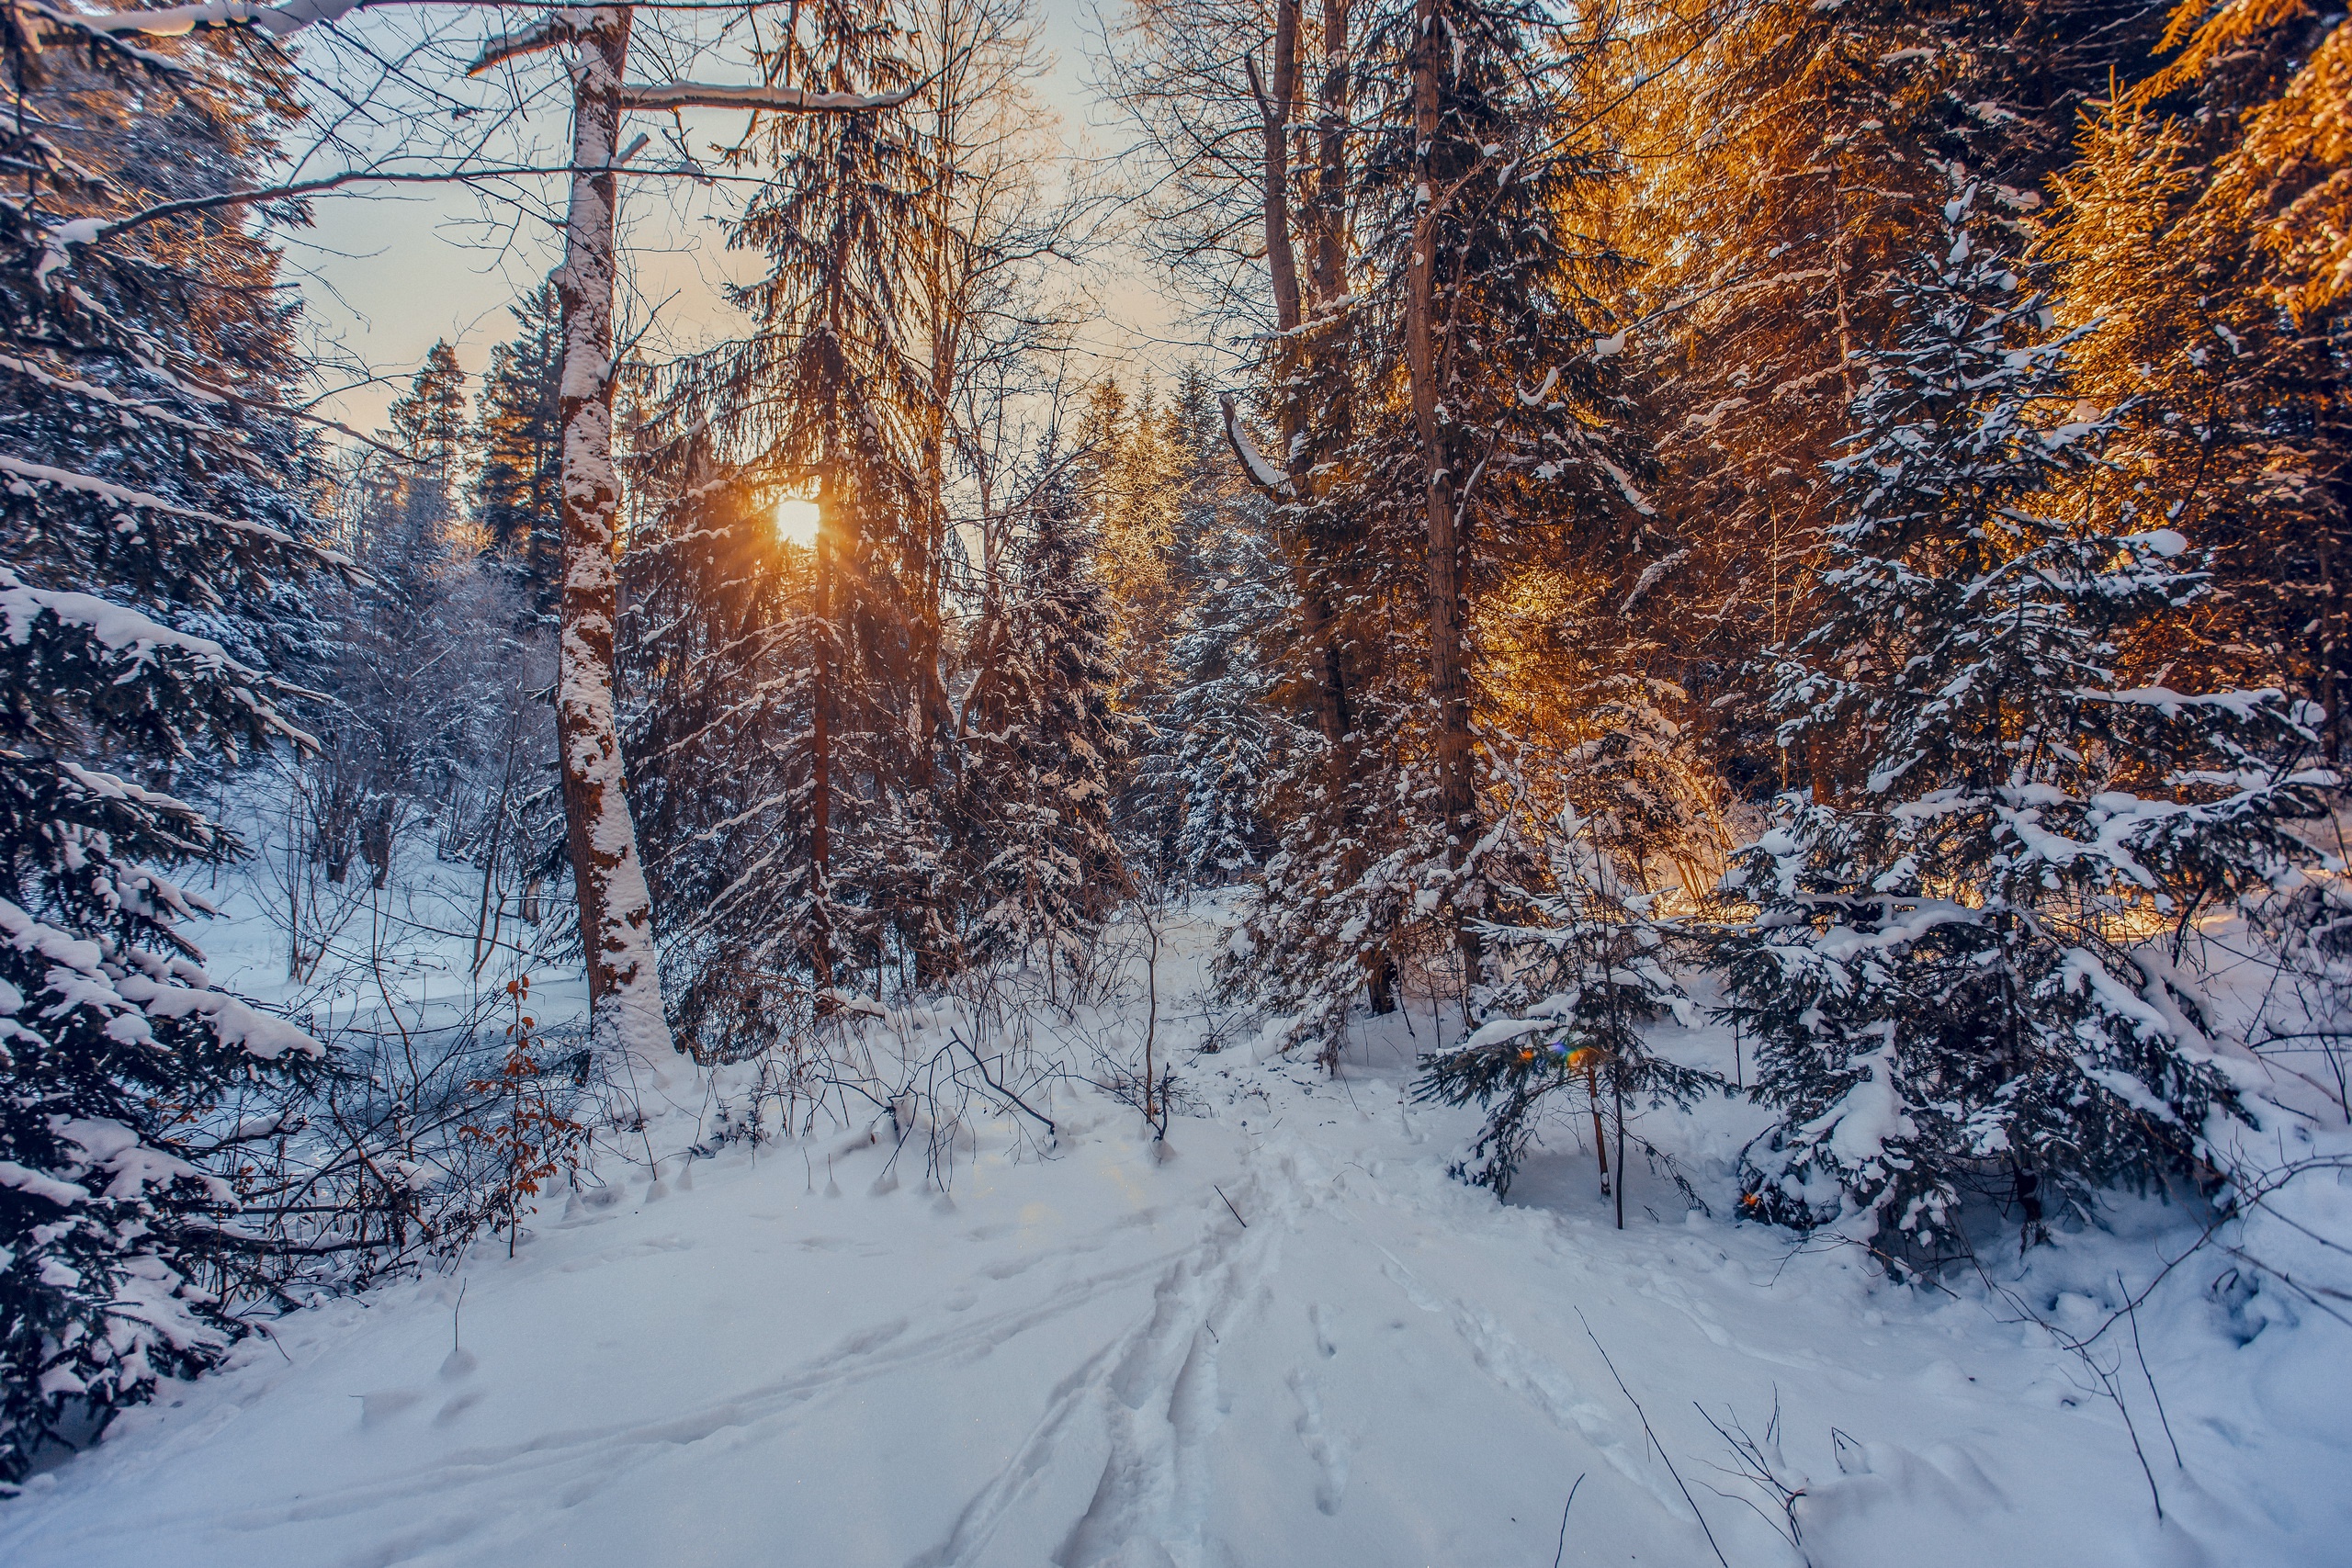 Зимнее утро в лесу